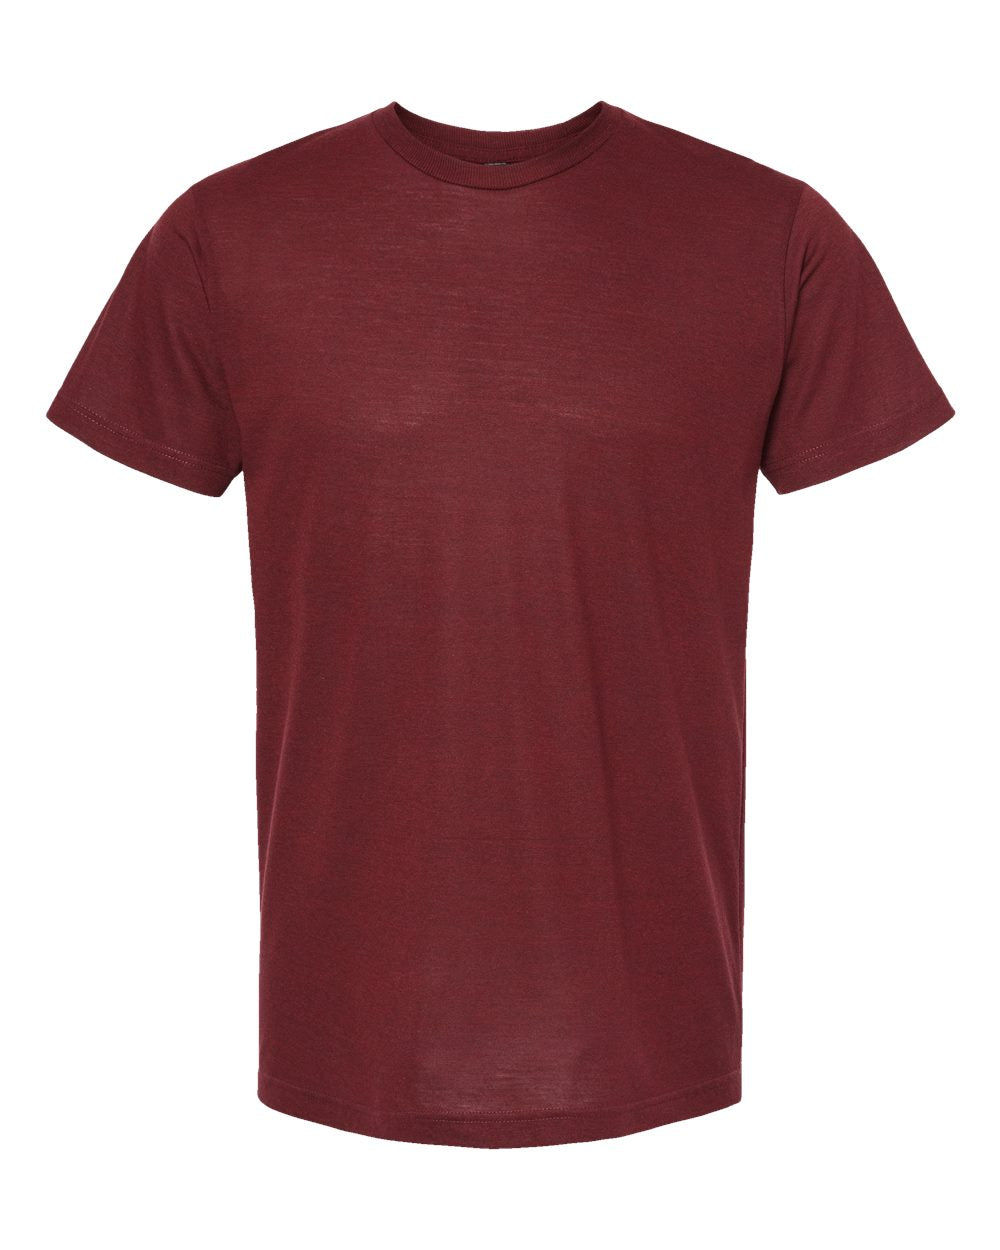 Tultex - Unisex Tri-Blend T-Shirt - 254